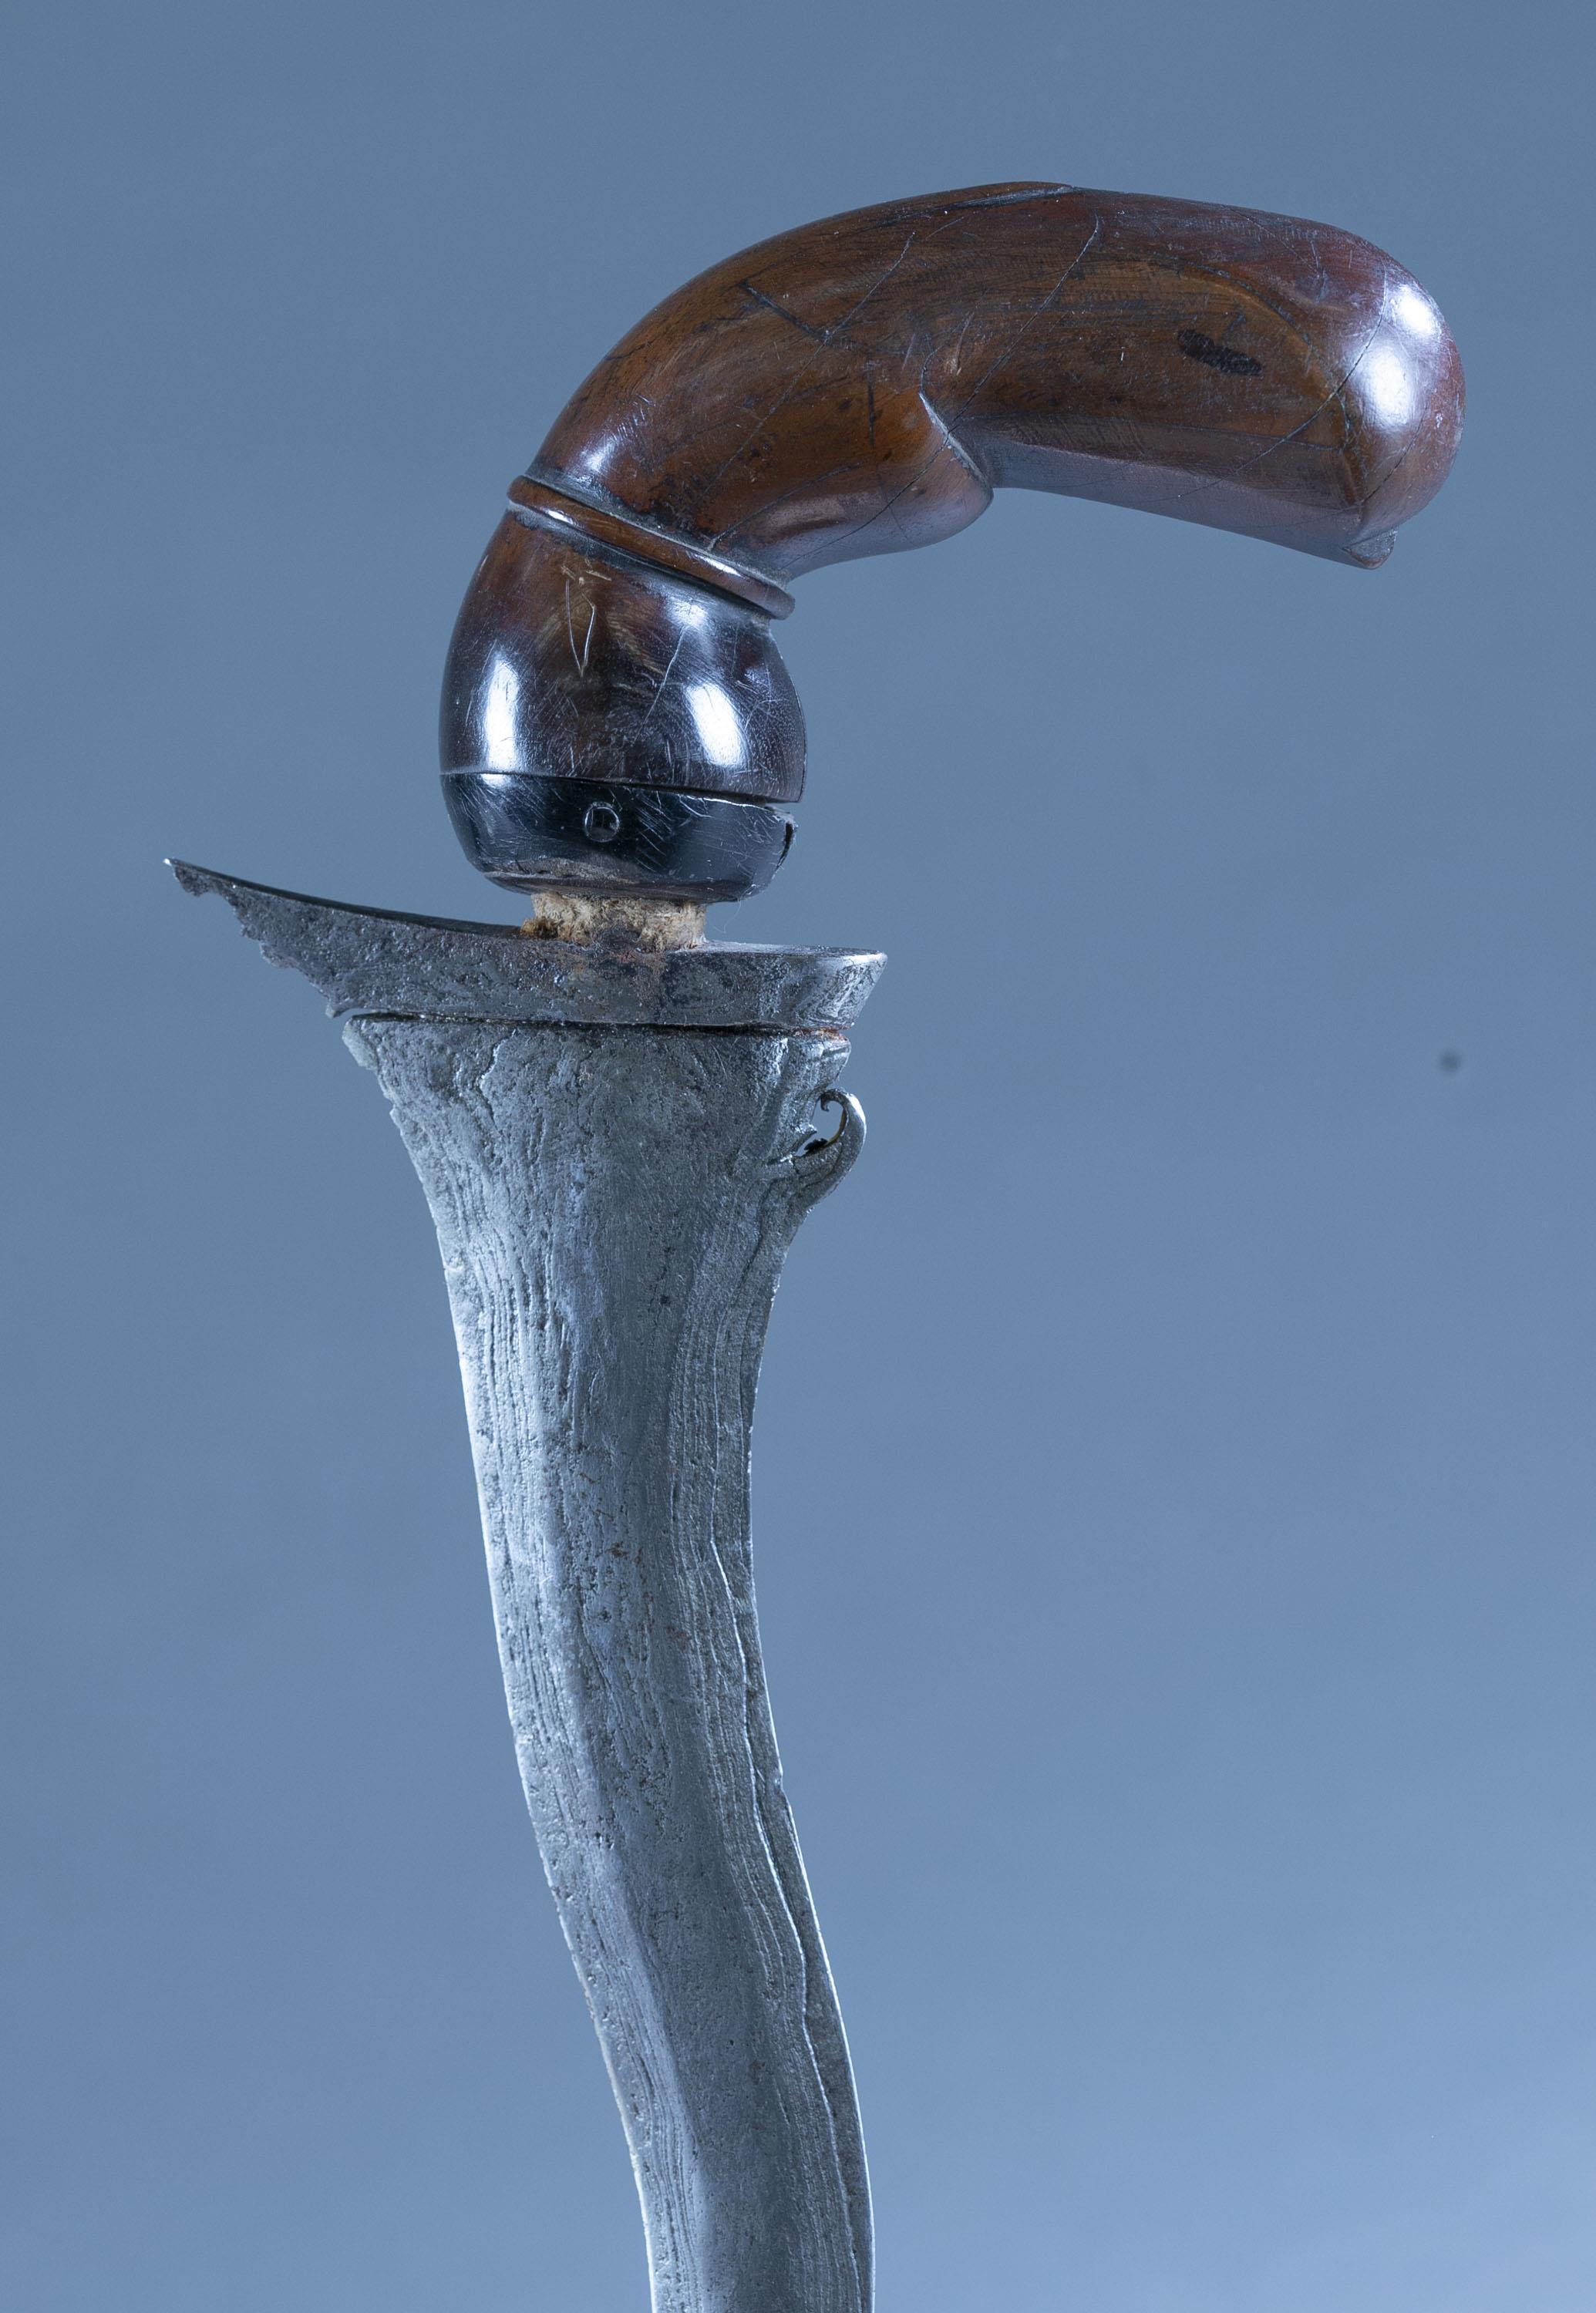 Indonesian keris sword with scabbard